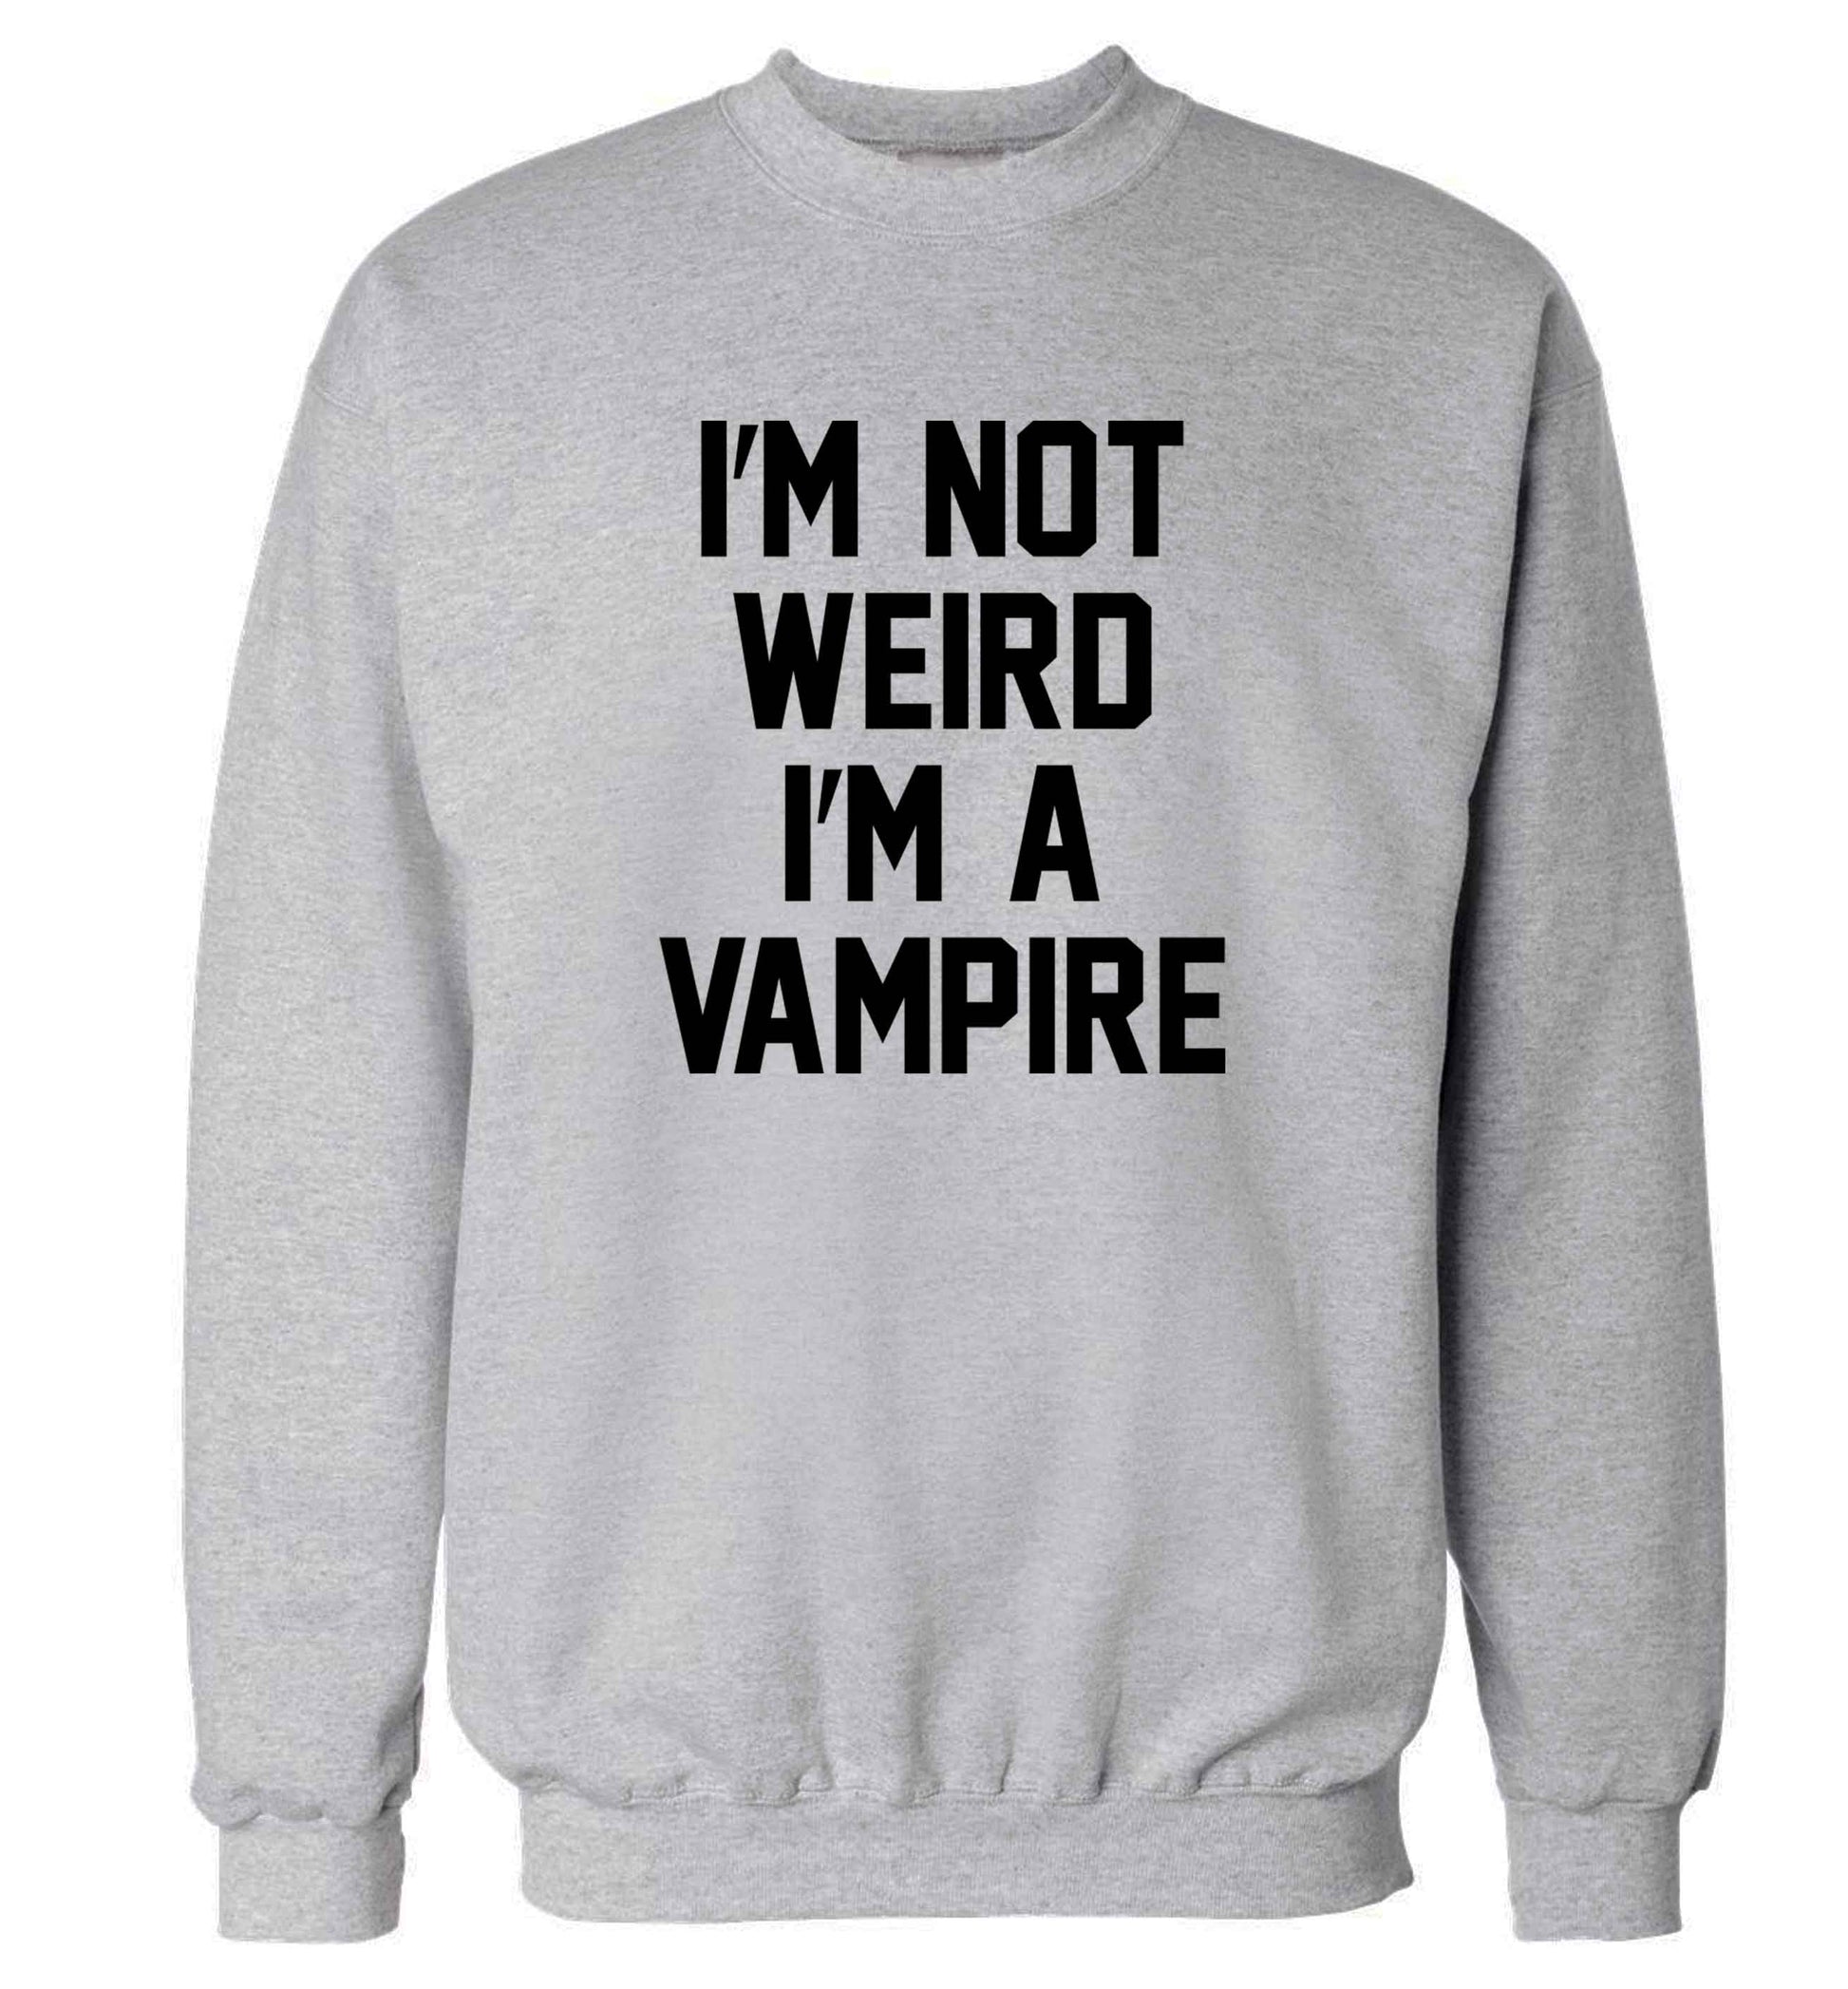 I'm not weird I'm a vampire adult's unisex grey sweater 2XL